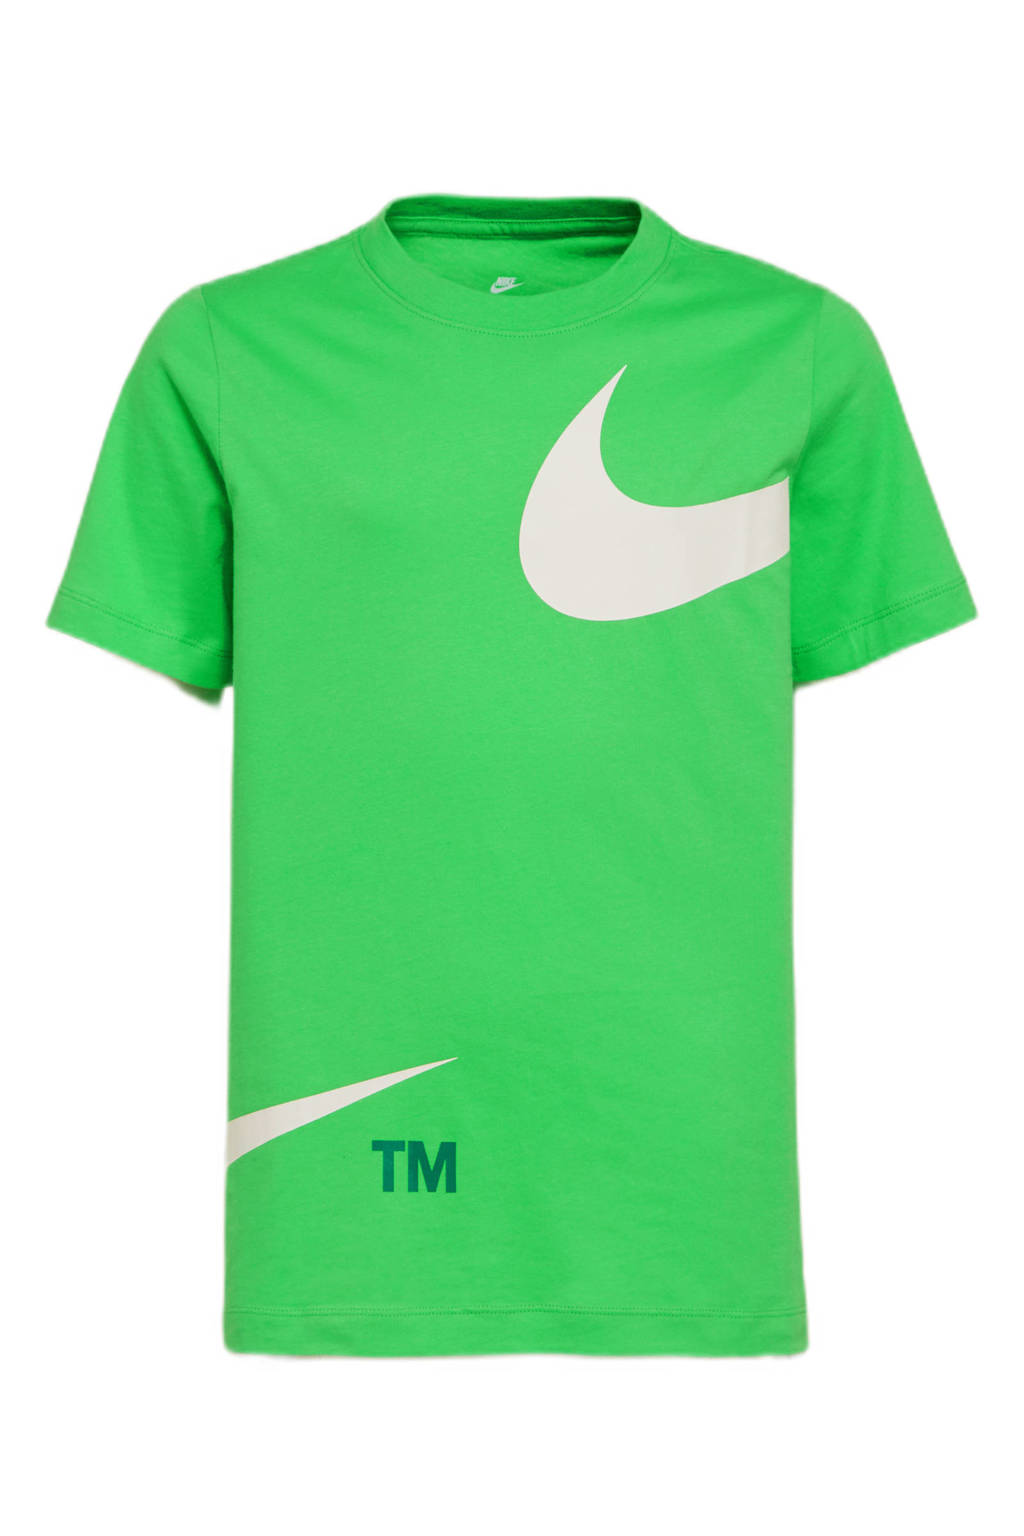 Nike T-shirt met logo groen, Groen